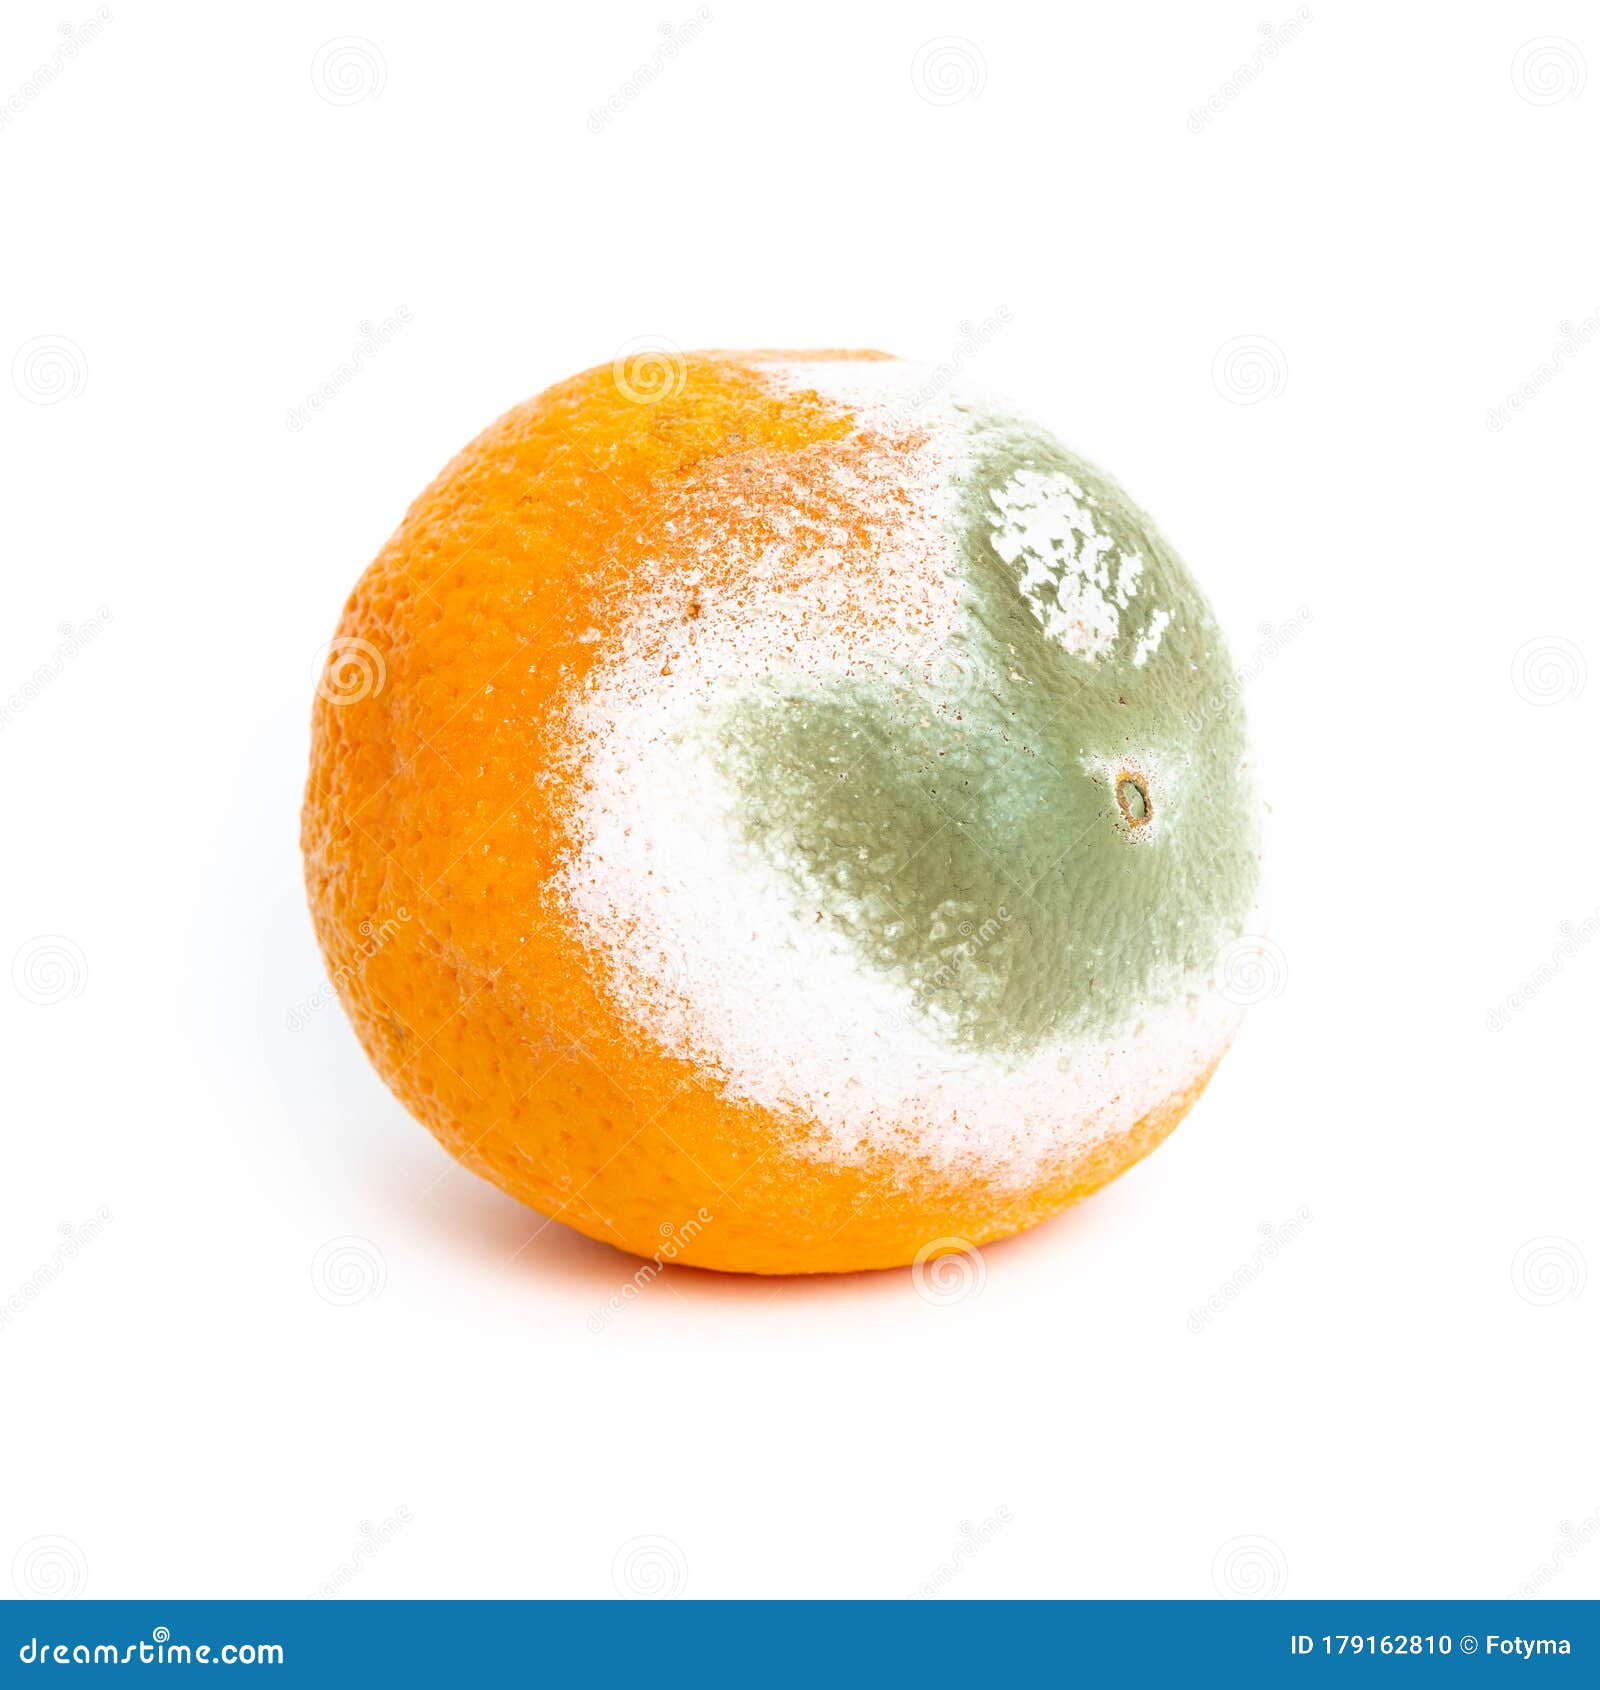 moldy rotten orange  on white